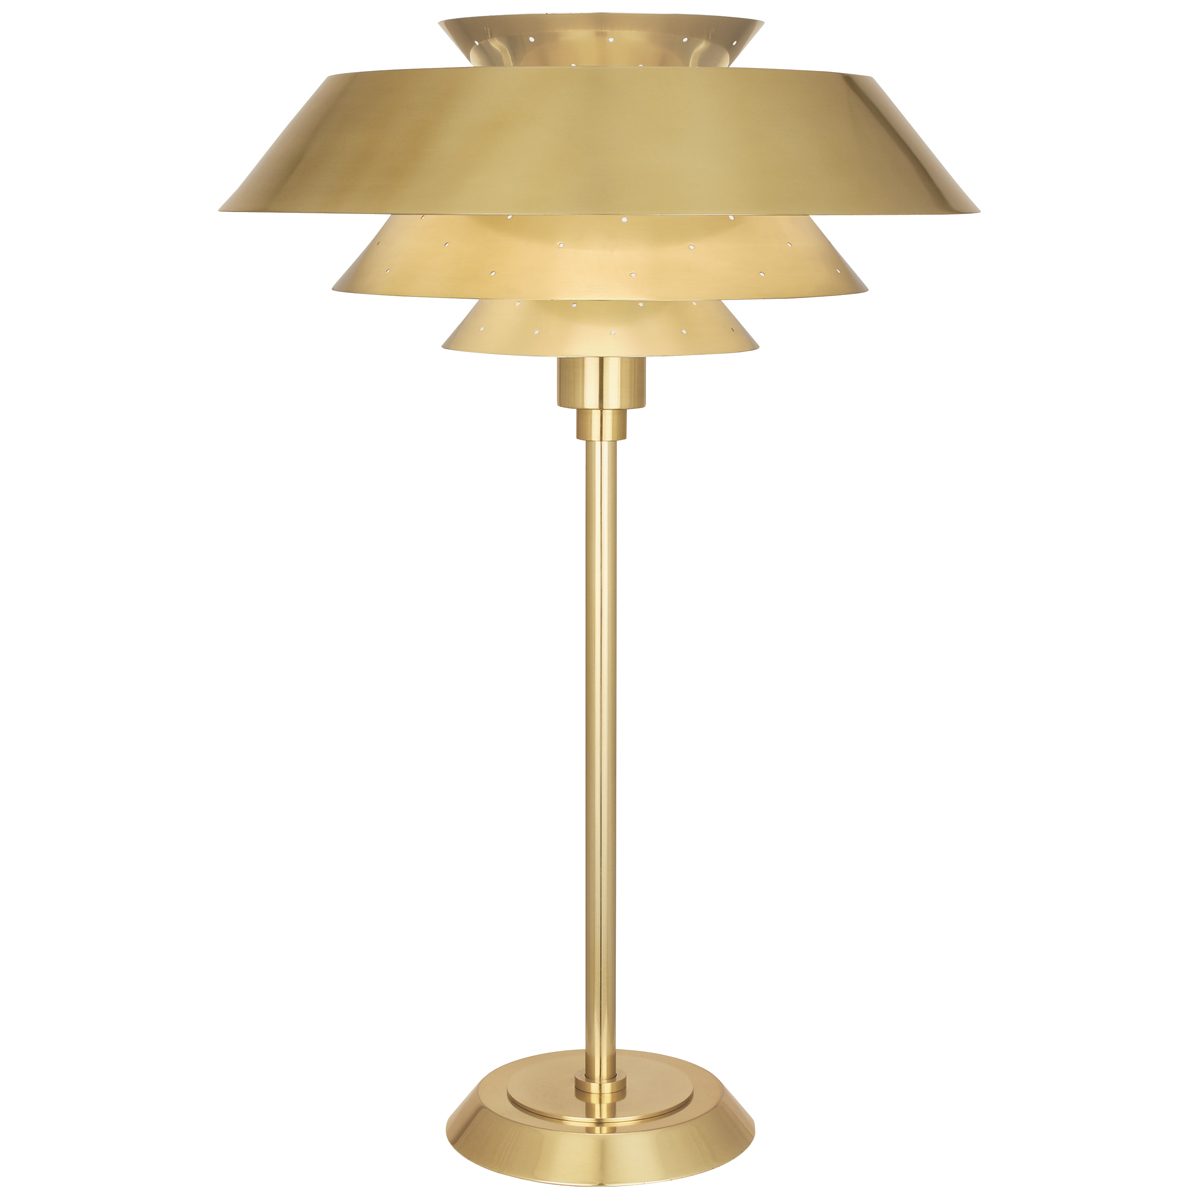 Pierce Table Lamp Style #980